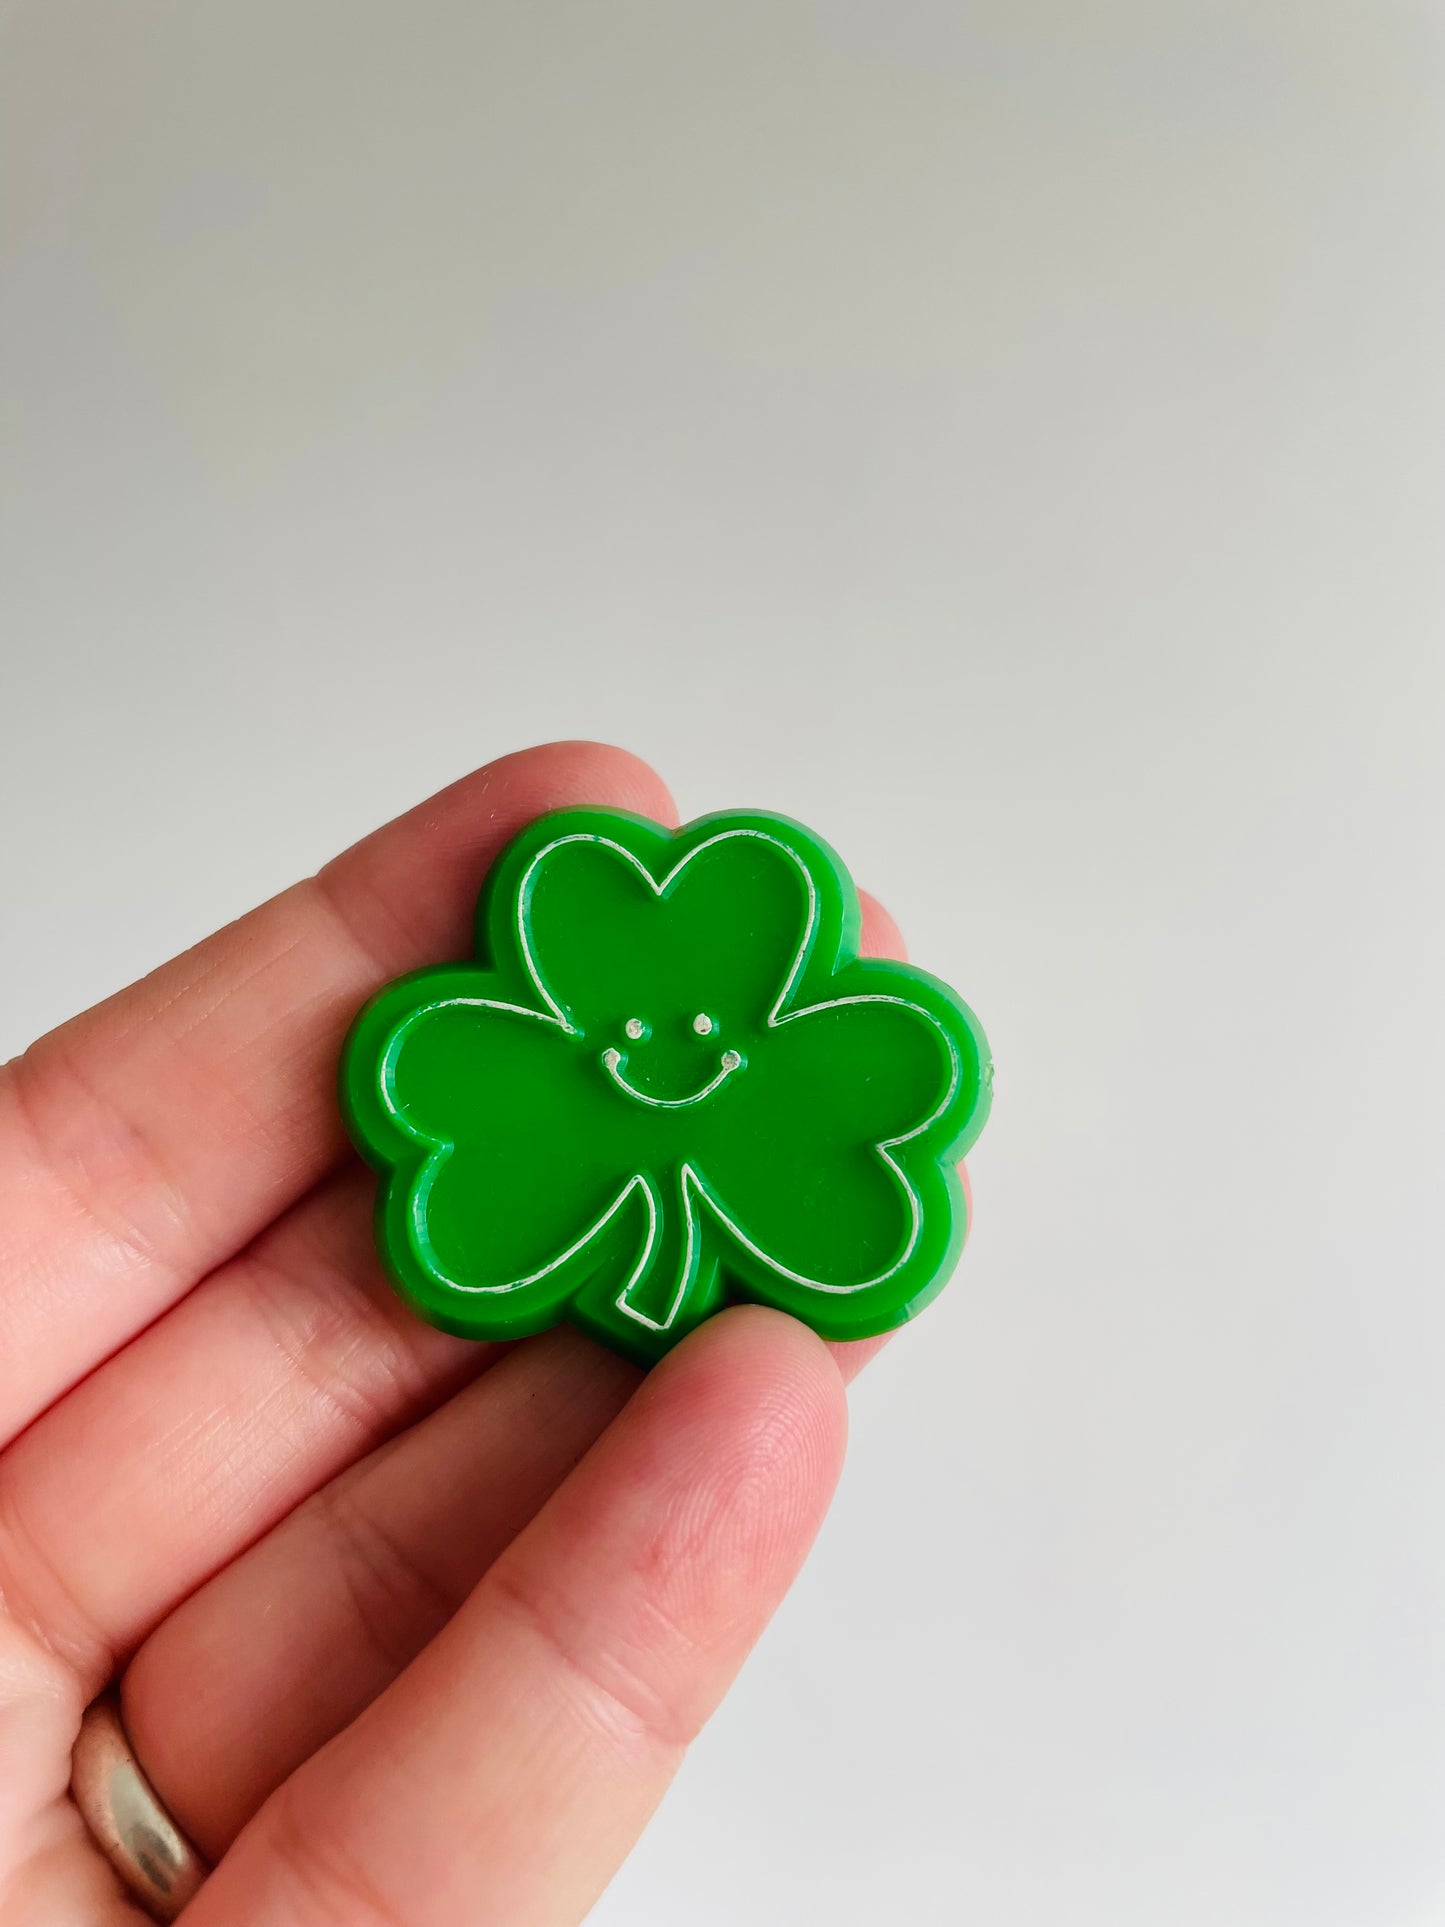 St. Patrick's Day Holiday Pin - Smiley Face Shamrock - Hallmark Cards Inc.